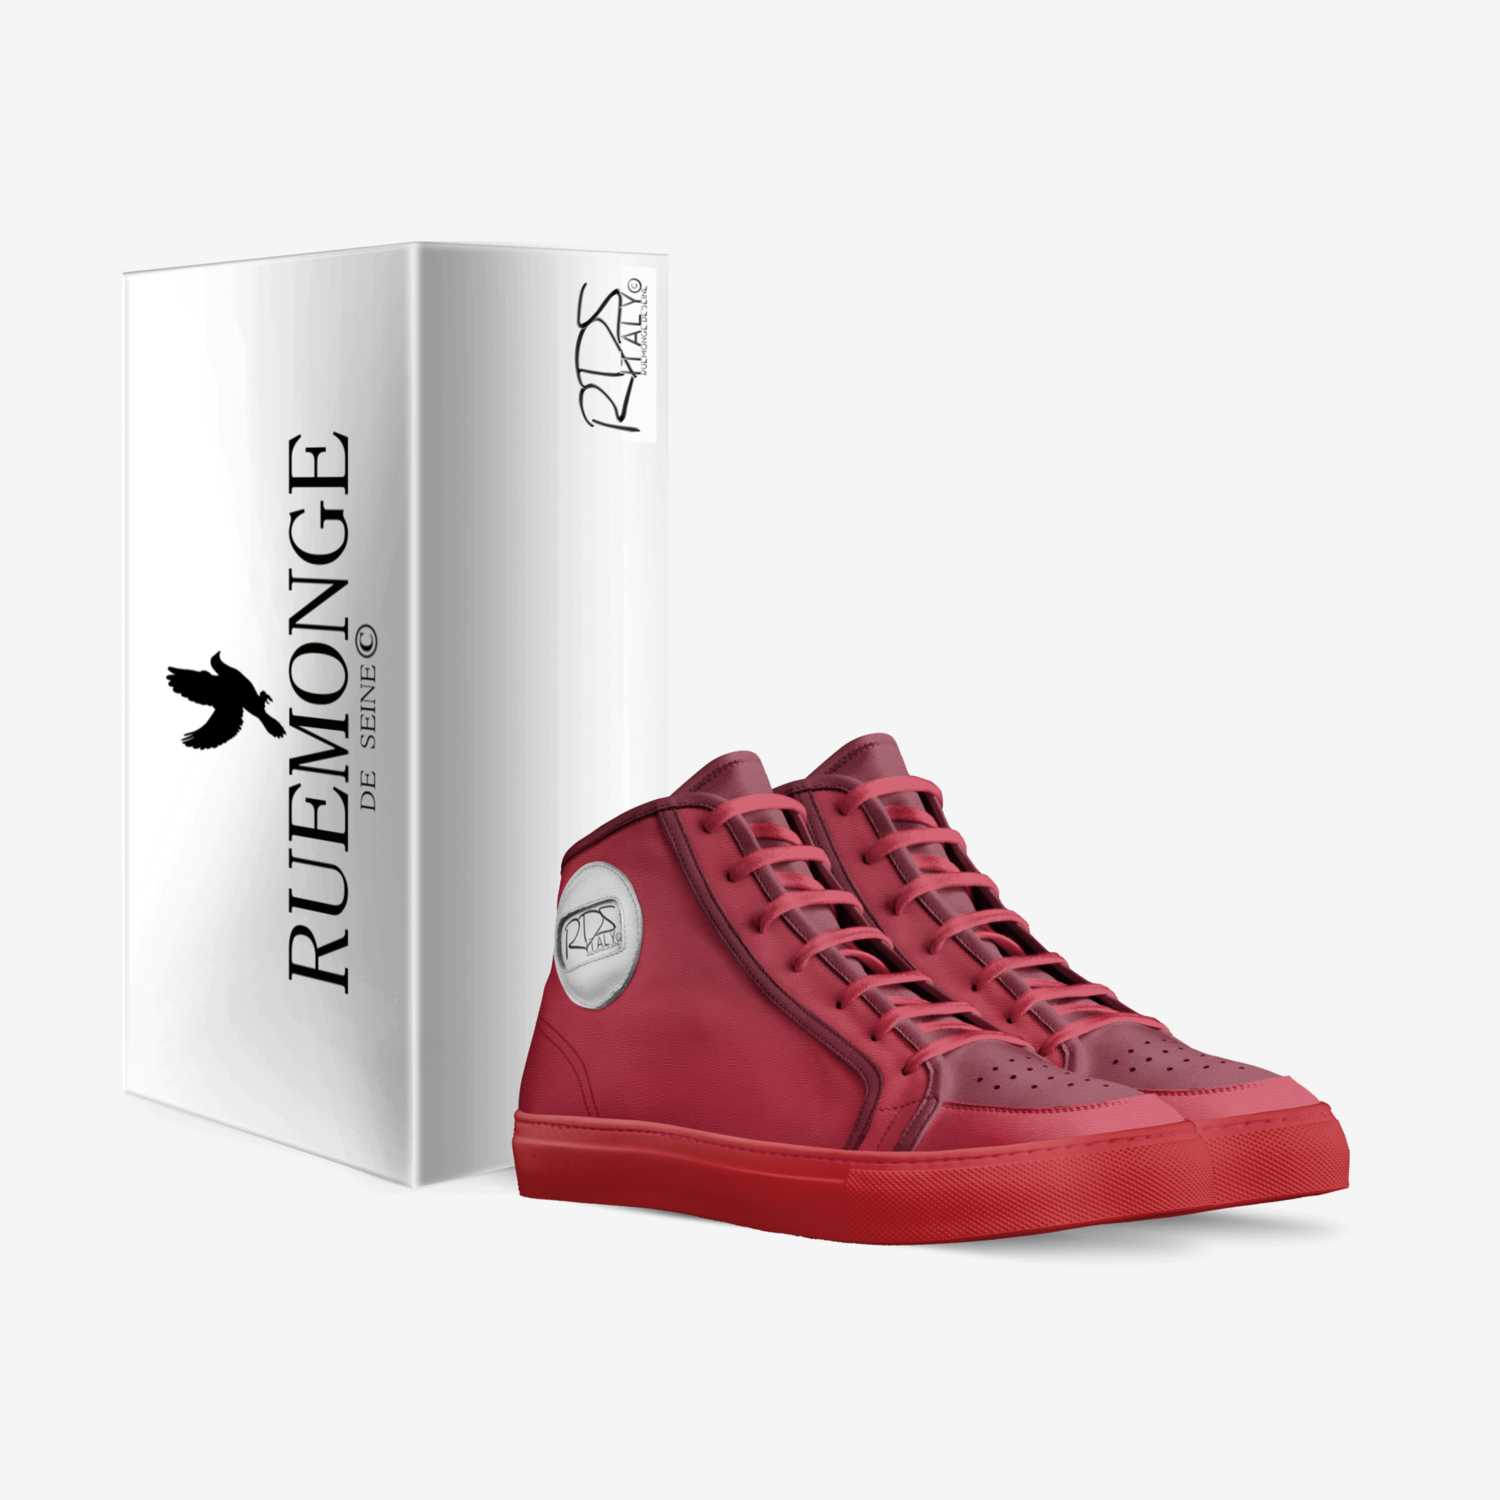 Rue de seine  custom made in Italy shoes by Ruemonge De'Seine | Box view